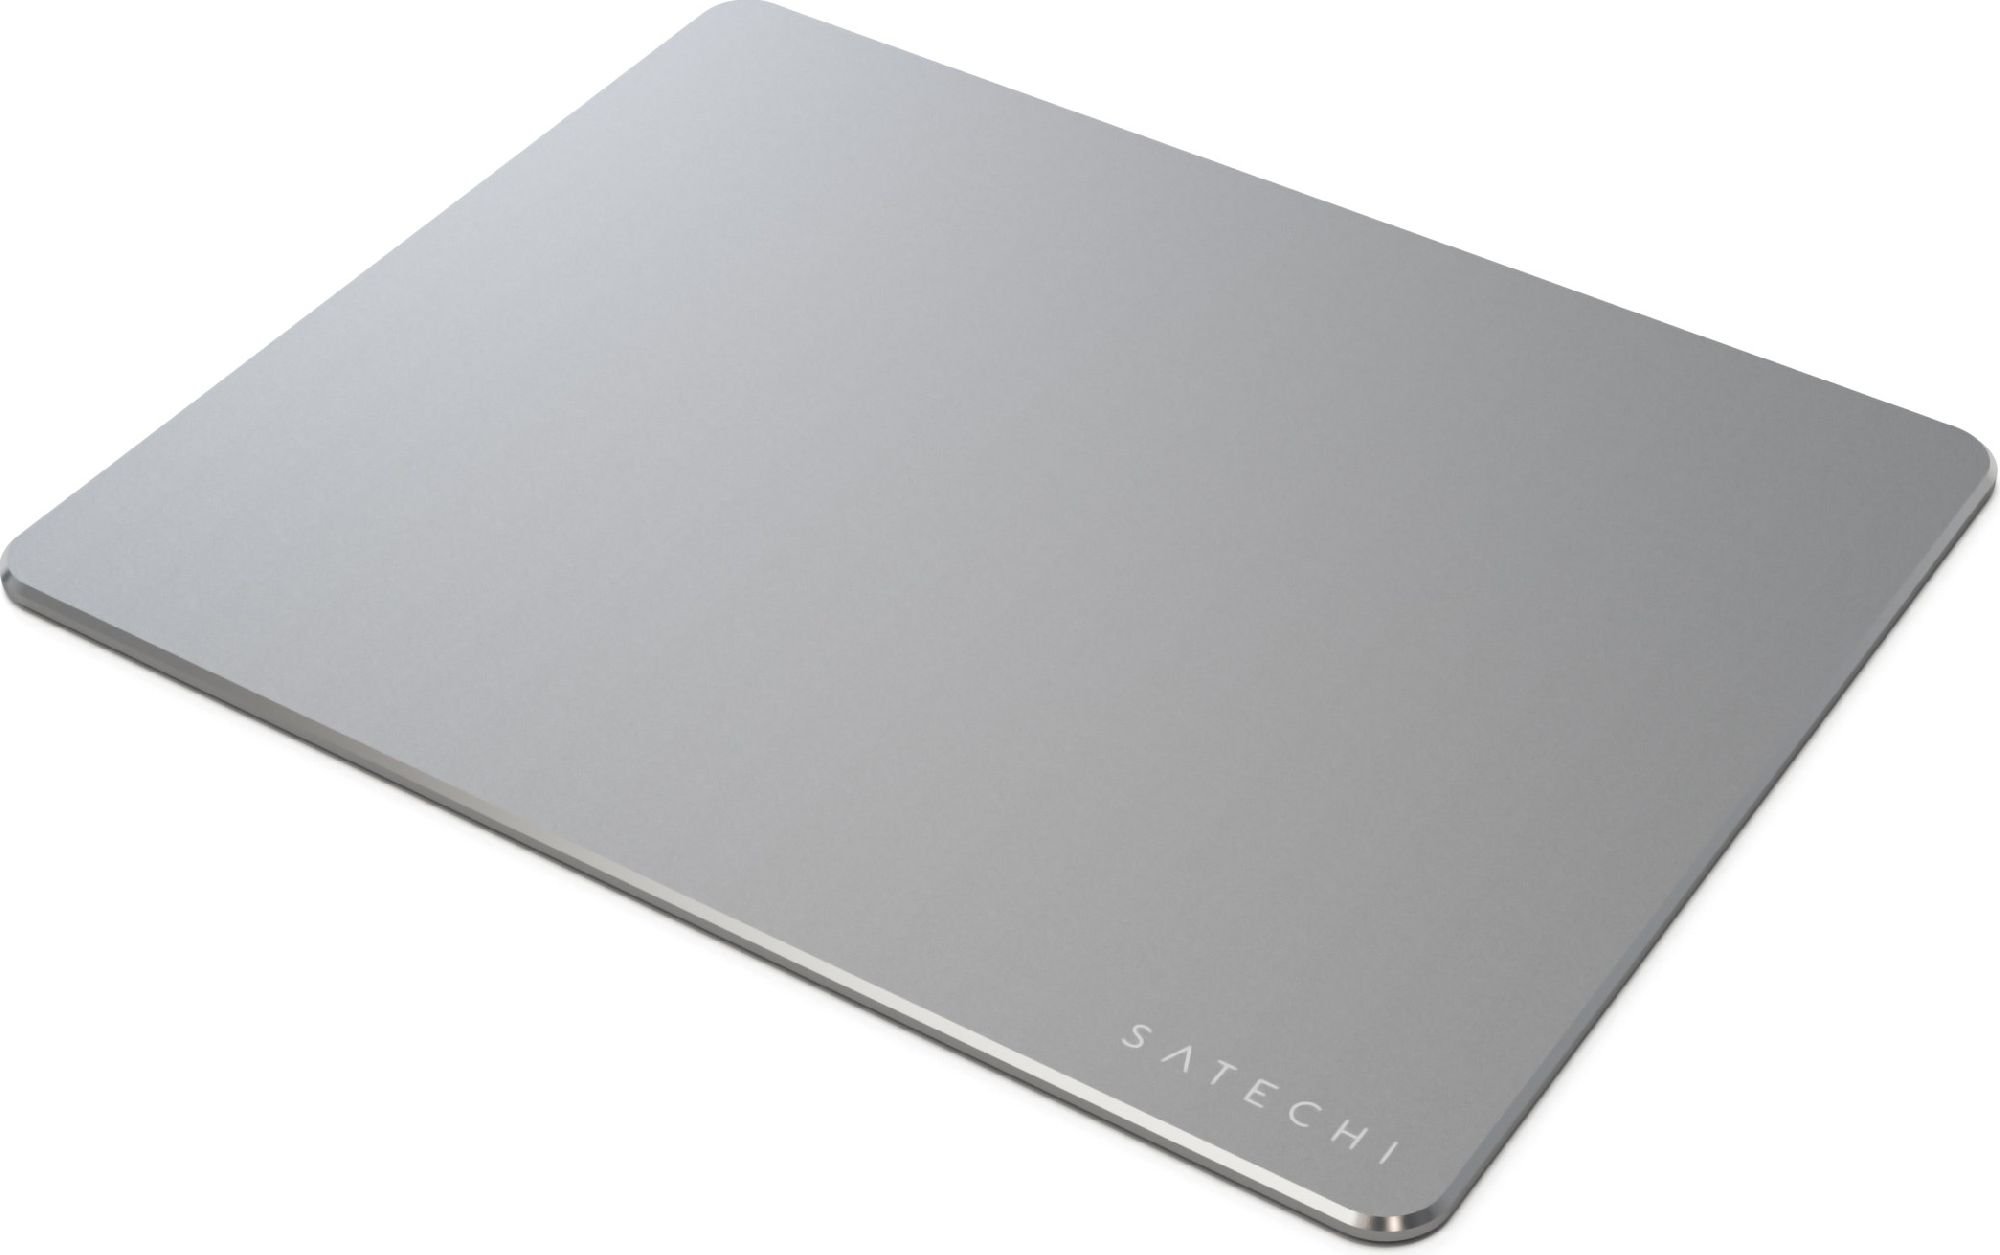 Mouse pad satechi Aluminium Mouse Pad Gwiezdna szarość (ST-AMPADM)